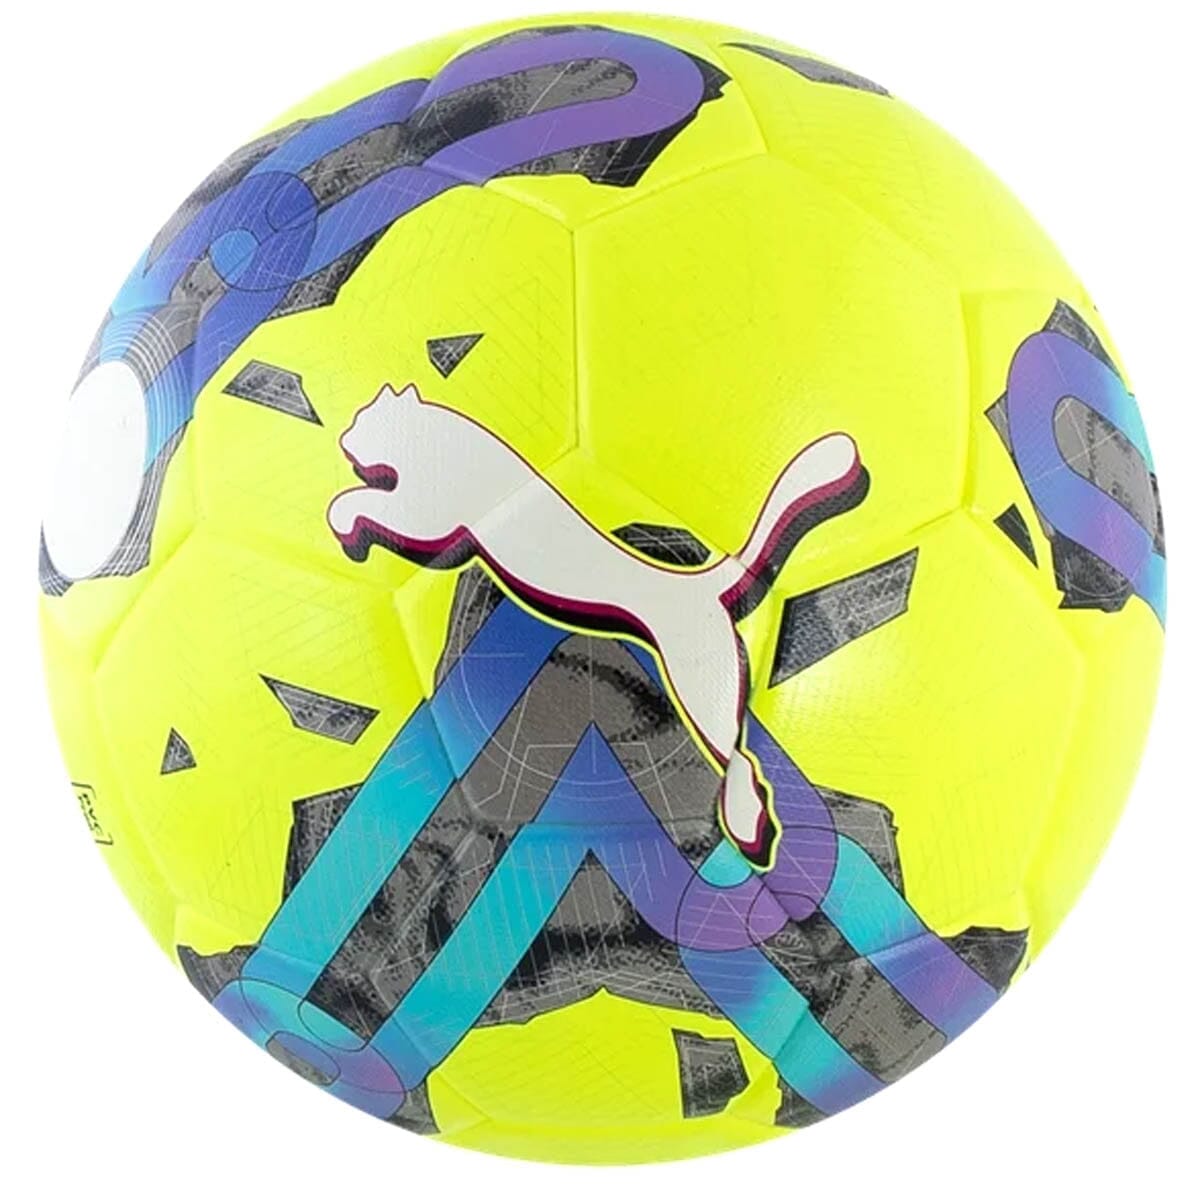 Puma Orbita 3 FIFA Quality NFHS Soccer Ball - Yellow | 08401502 Soccer Ball Puma 5 Yellow 